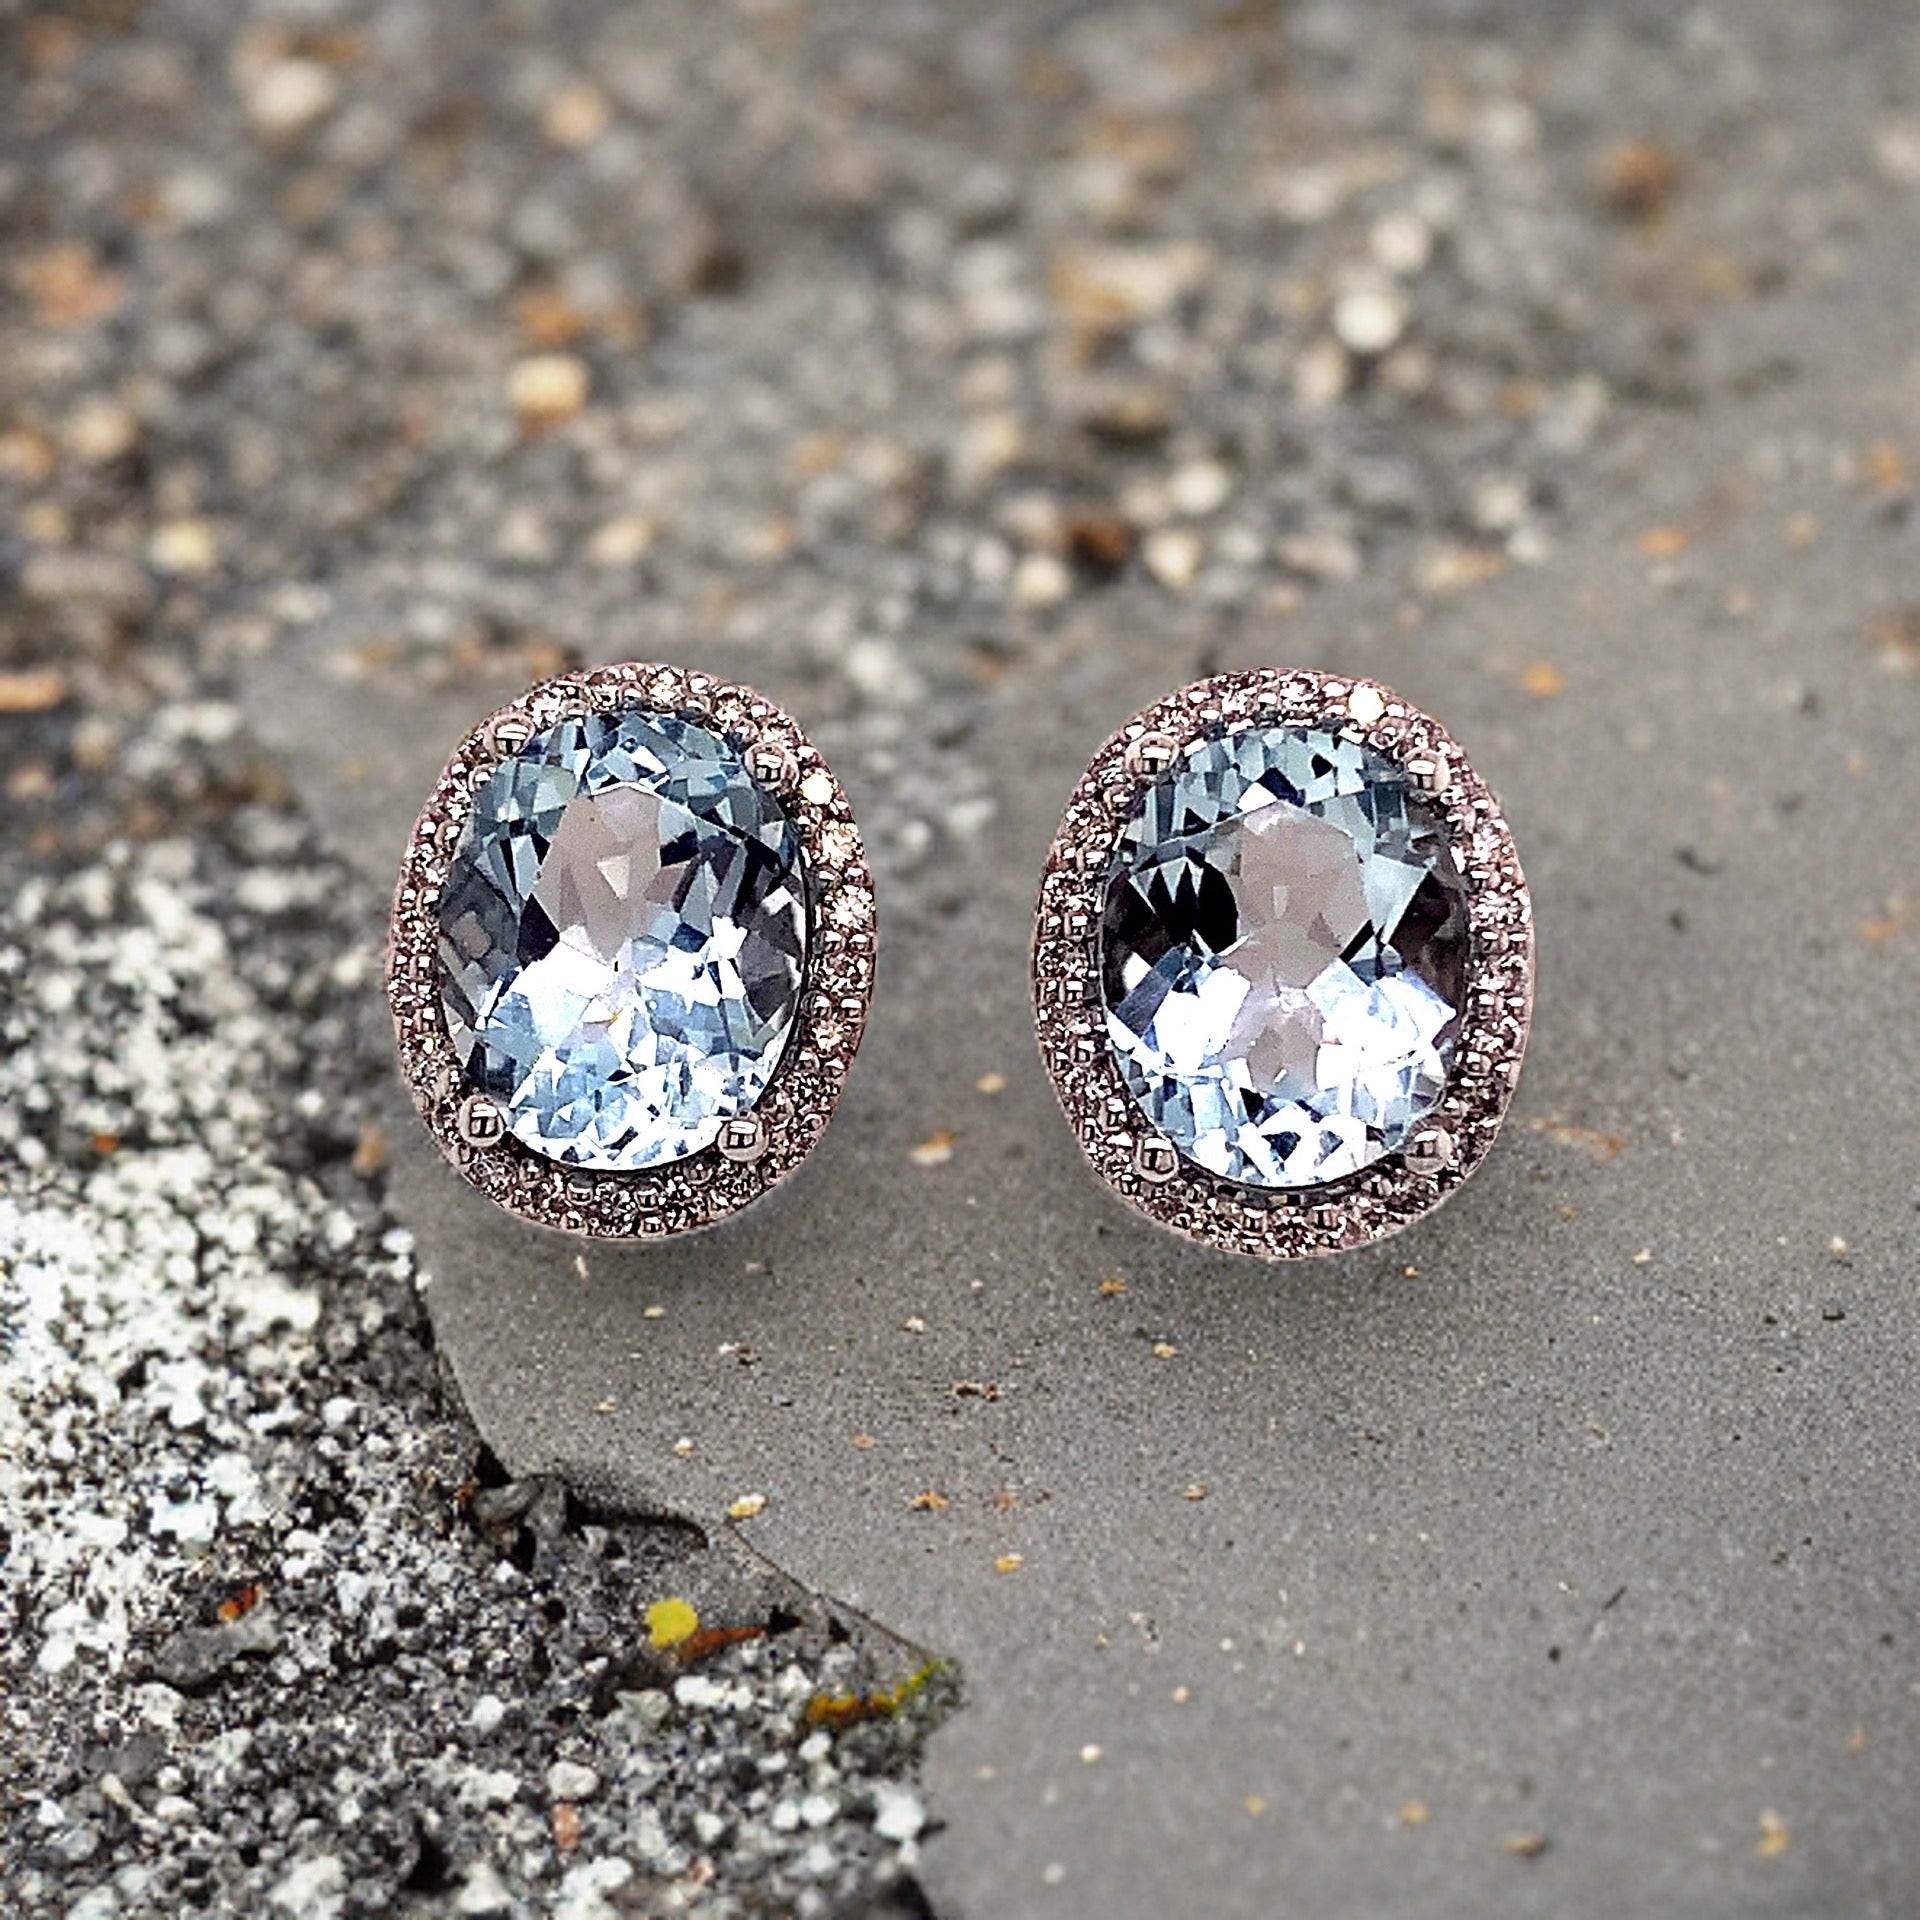 Natural Aquamarine Diamond Stud Earrings 14k WG 5.46 TCW Certified $5,950 121115 - Certified Fine Jewelry